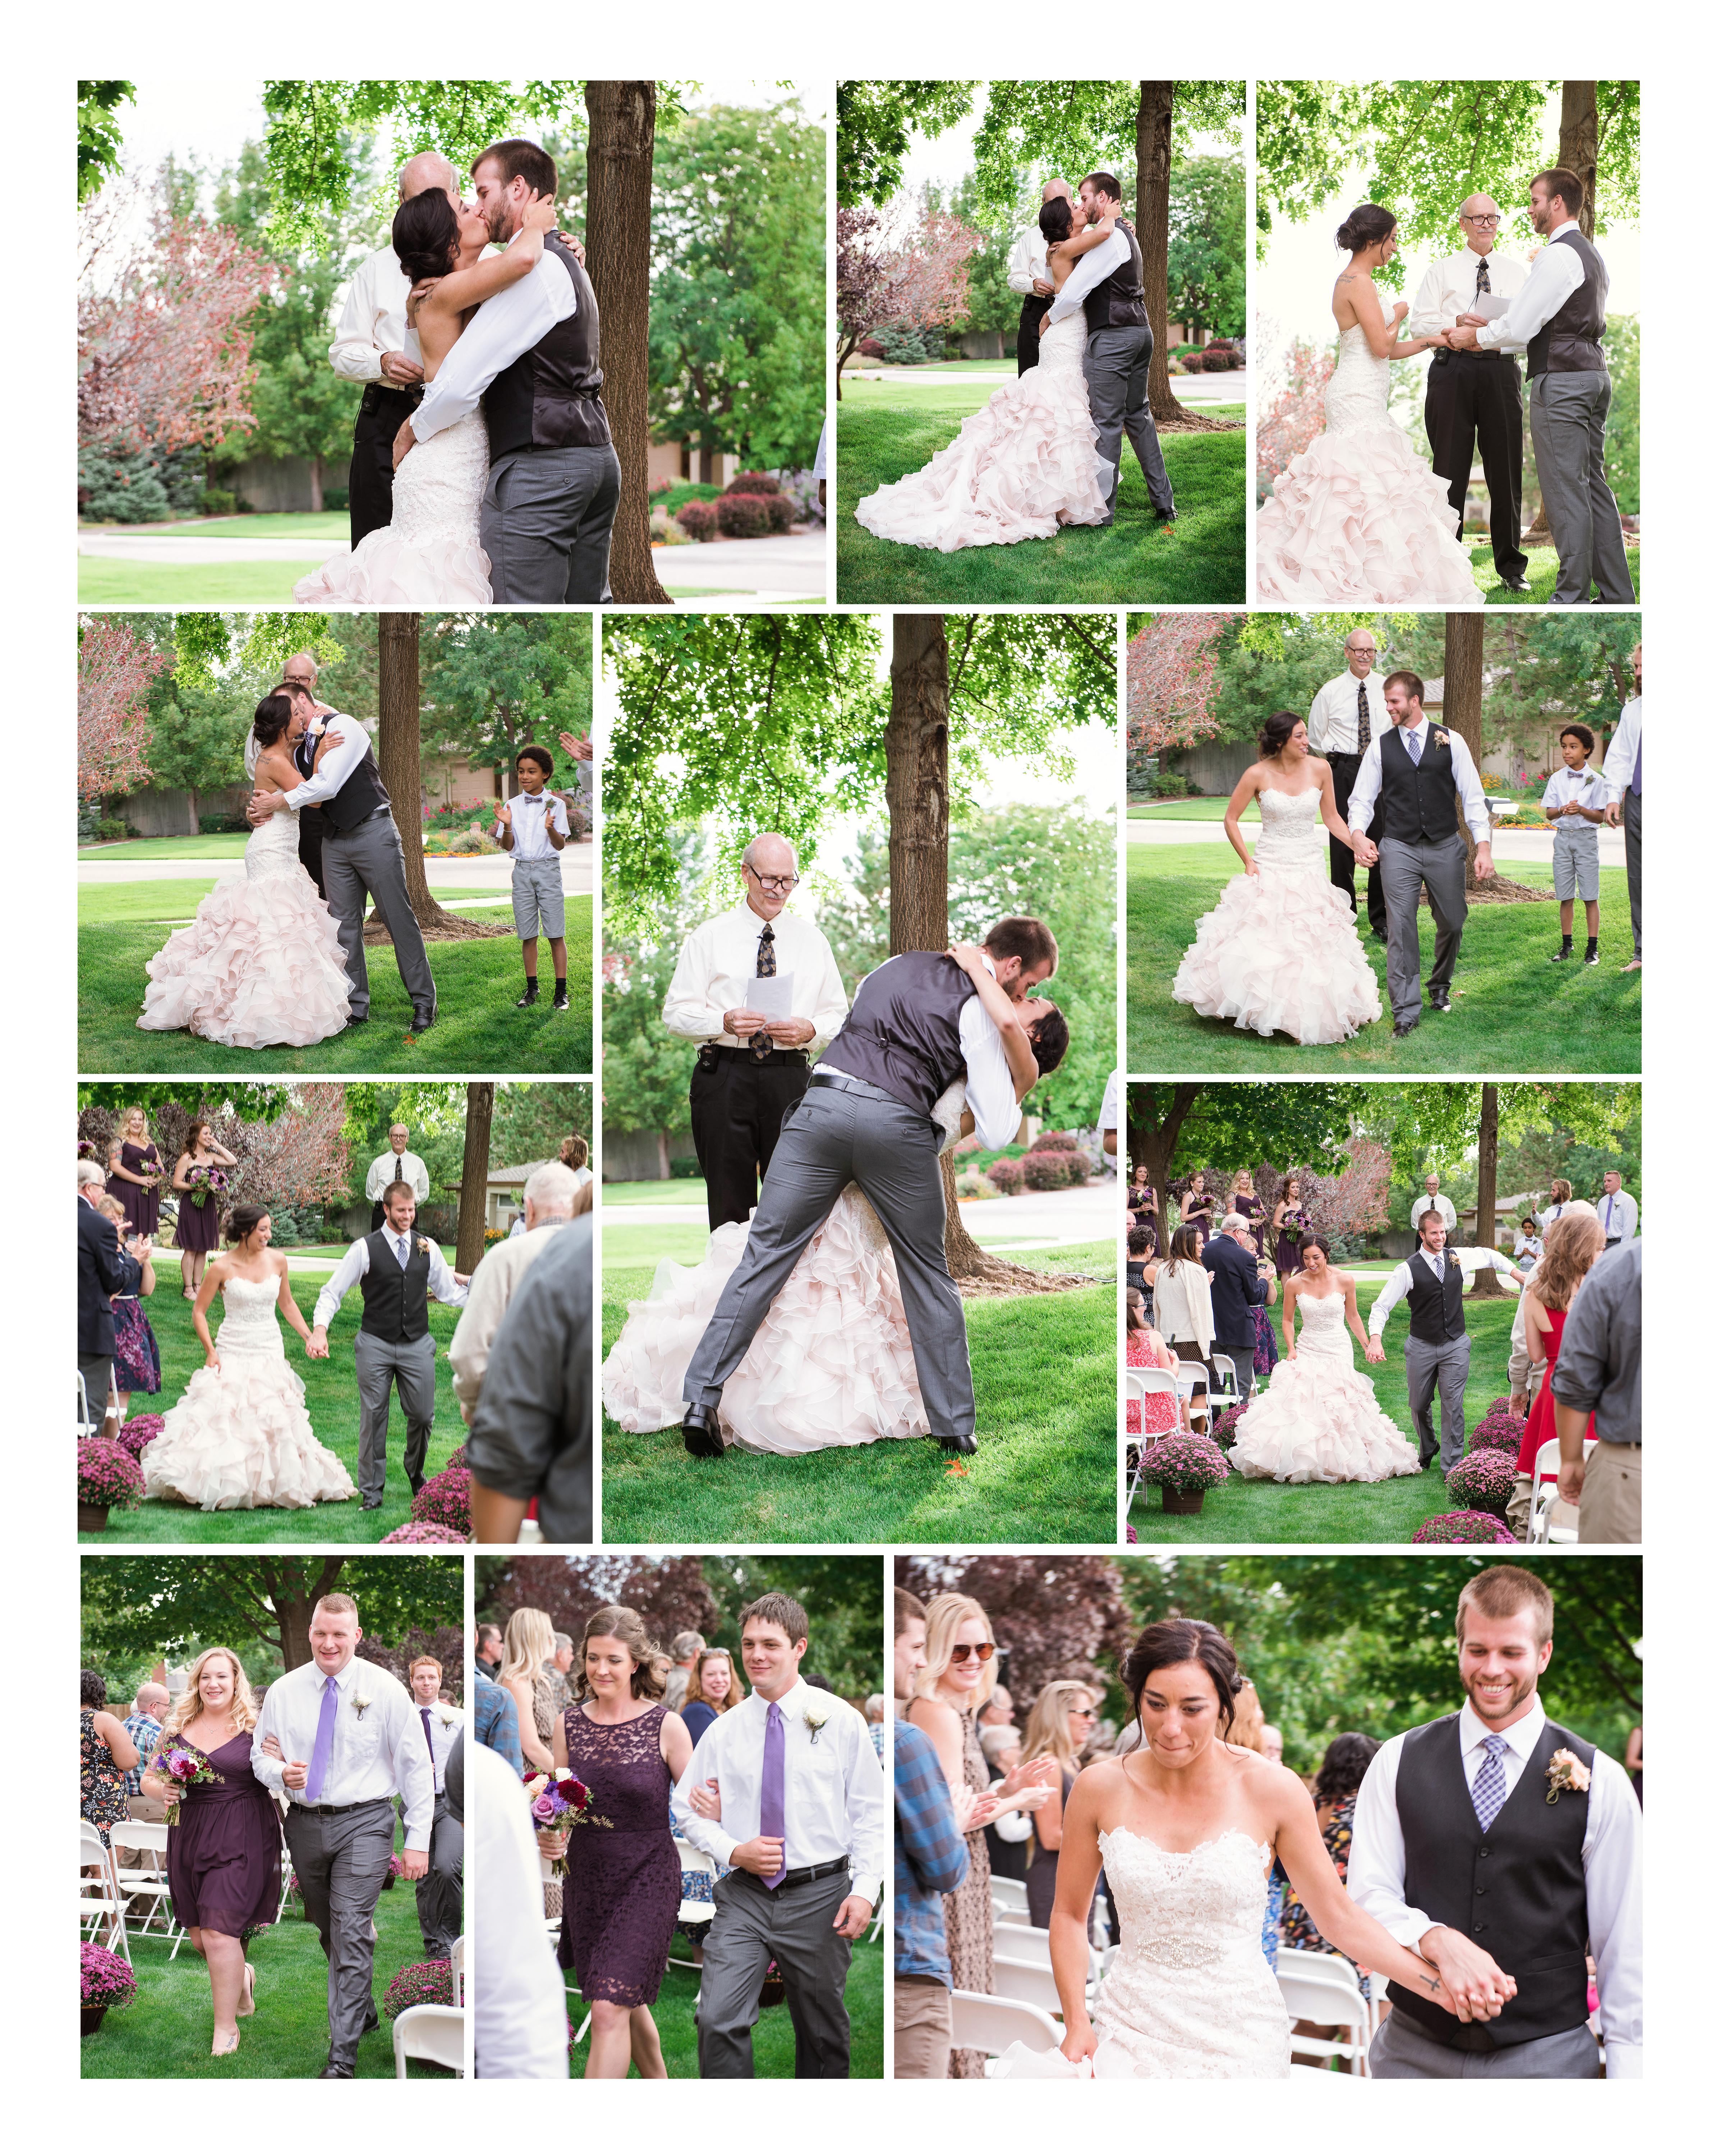 Boise Idaho Wedding Photographer | Kim Starkey Photography | www.kimstarkeyphotography.com